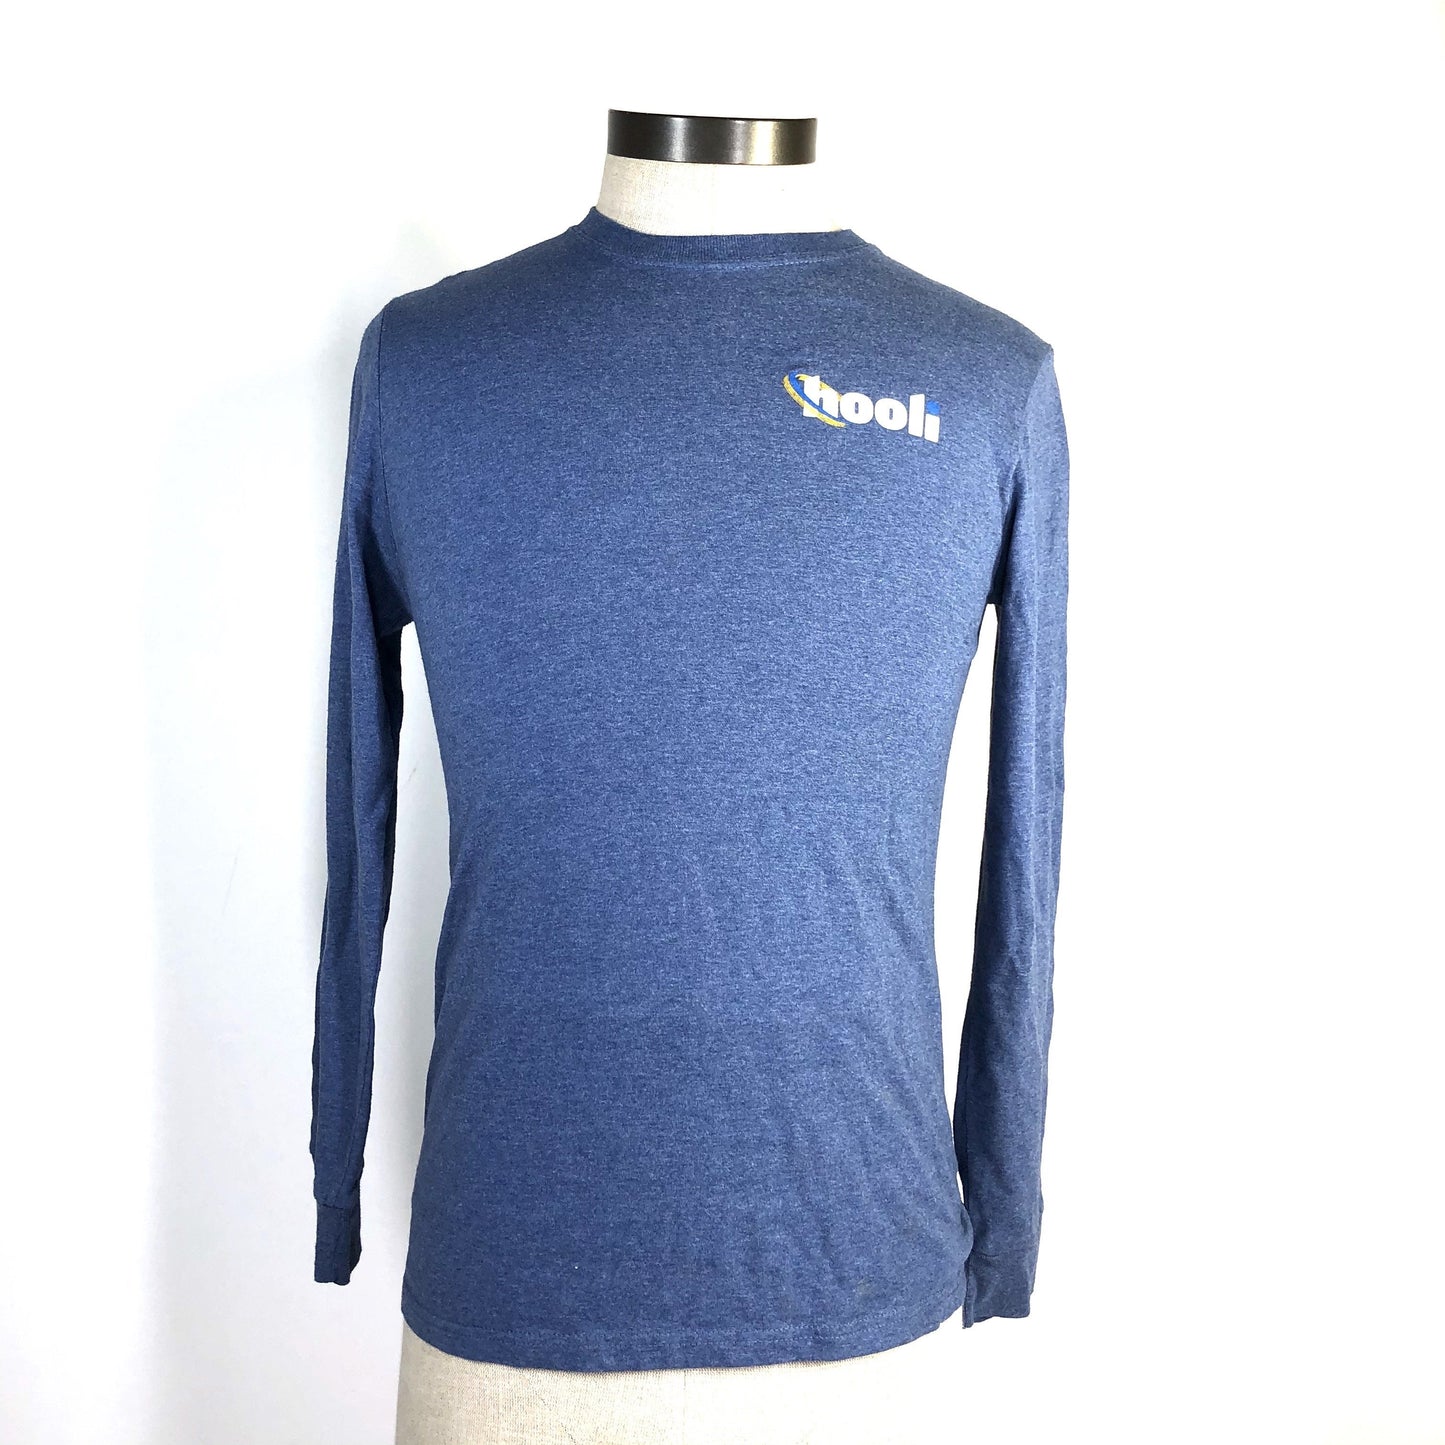 SILICON VALLEY: Blue Long Sleeve Hooli Shirt